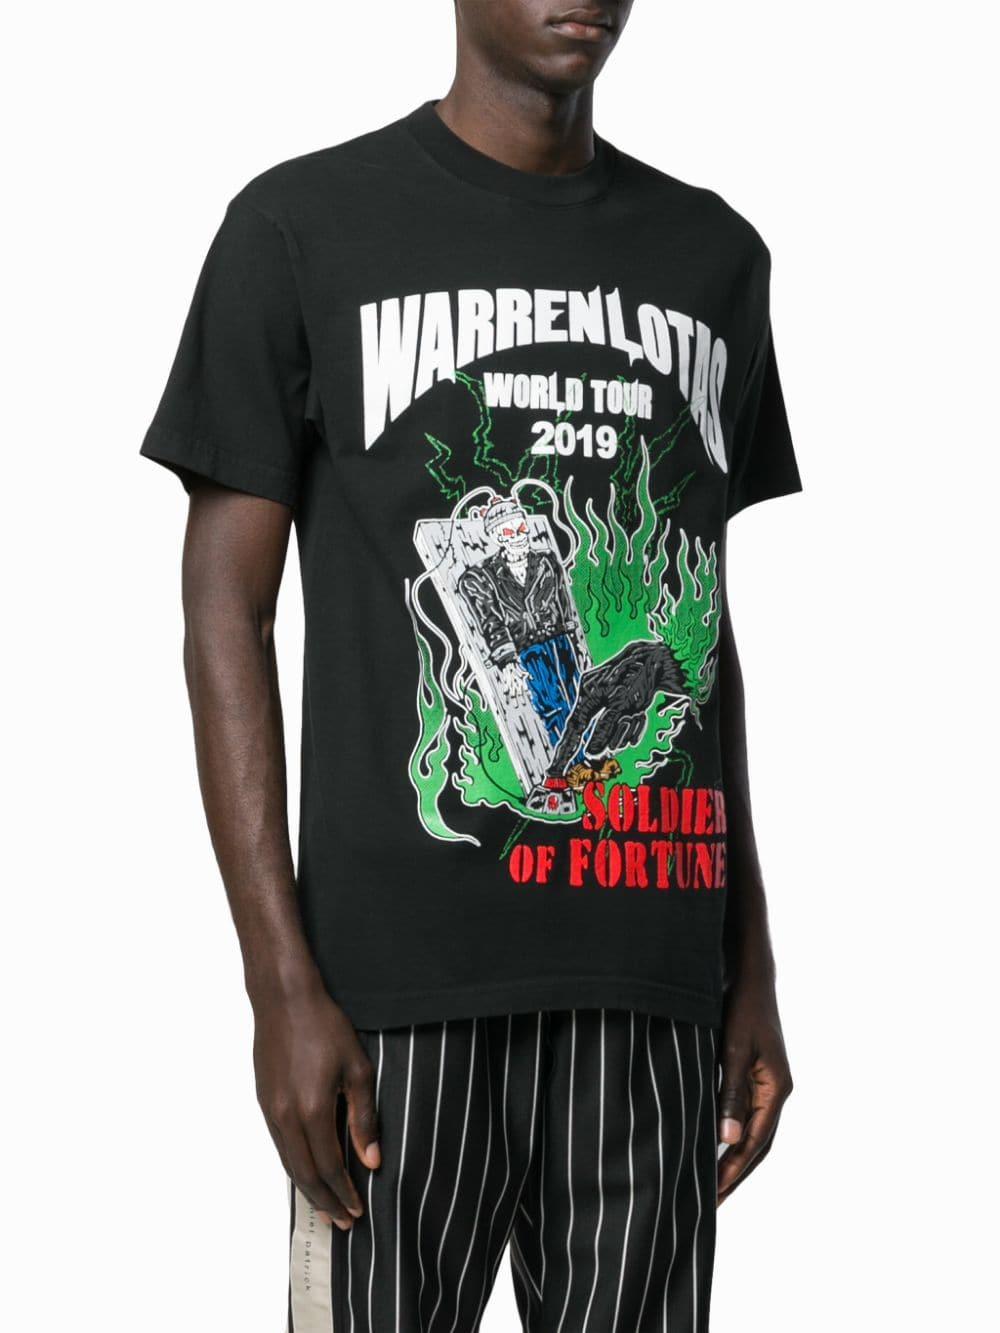 Warren Lotas World Tour Print T-shirt in Black for Men - Save 25% - Lyst